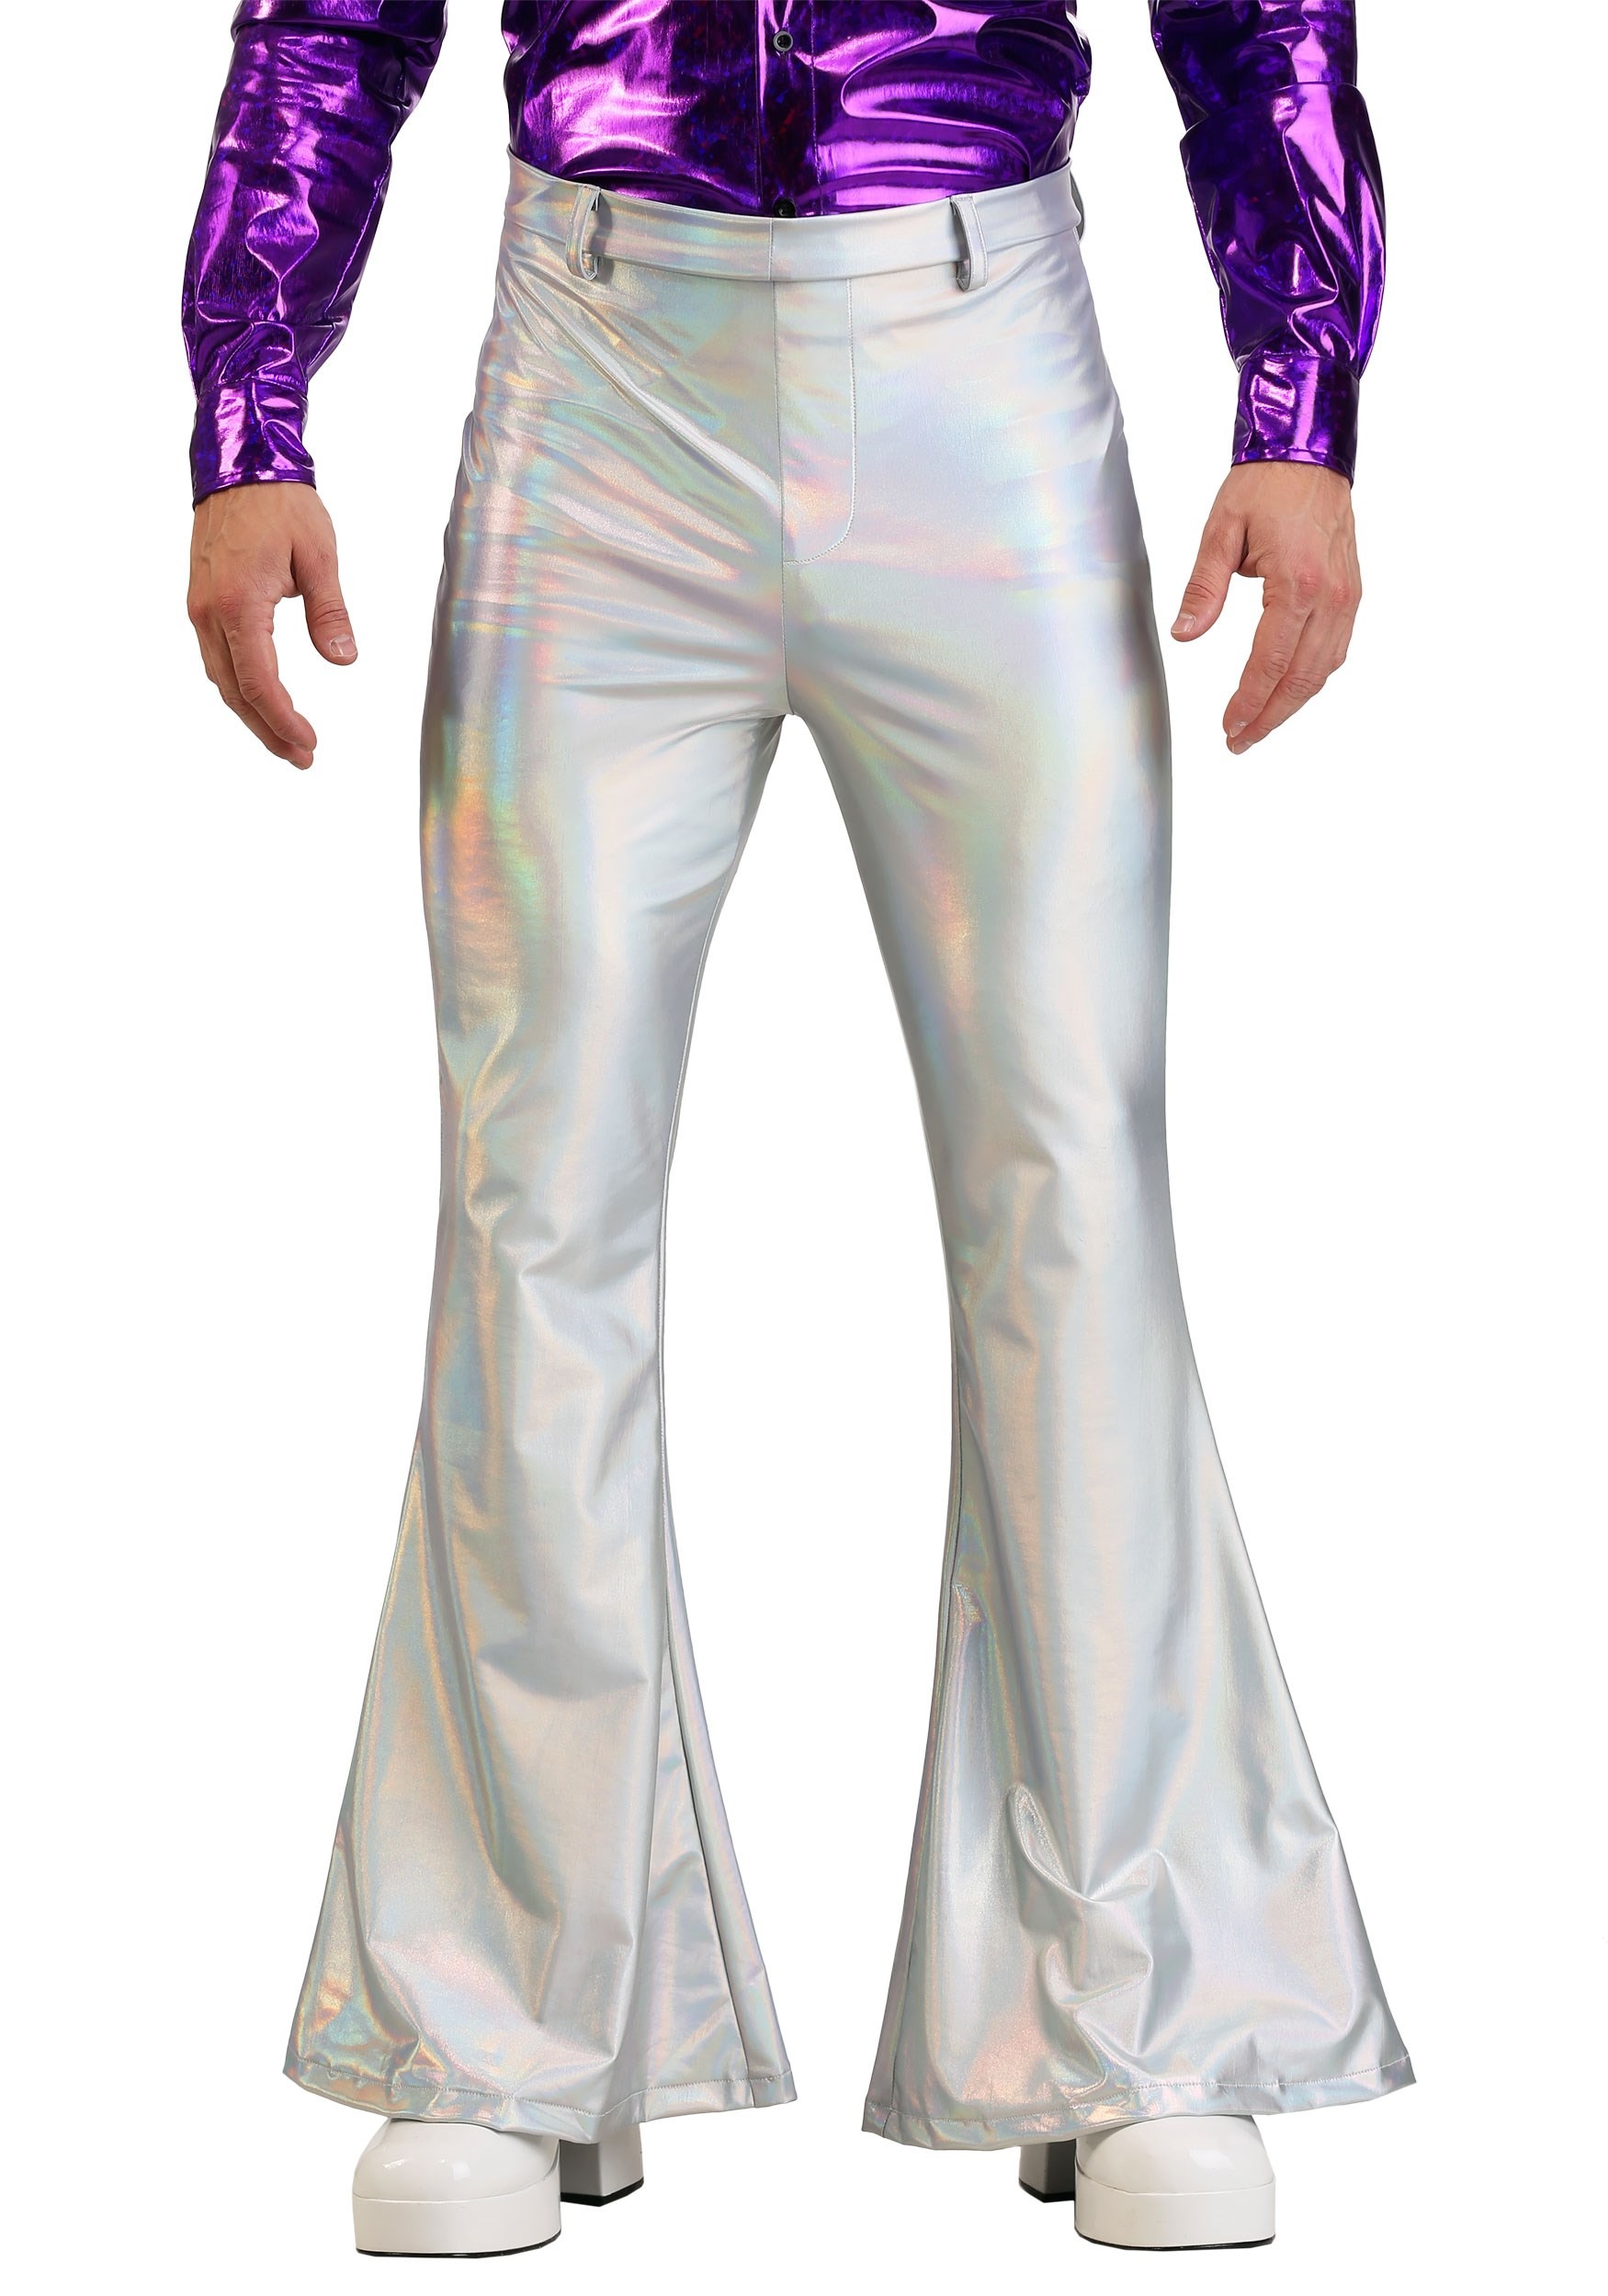 Adult Plus Size Holographic Disco Pants